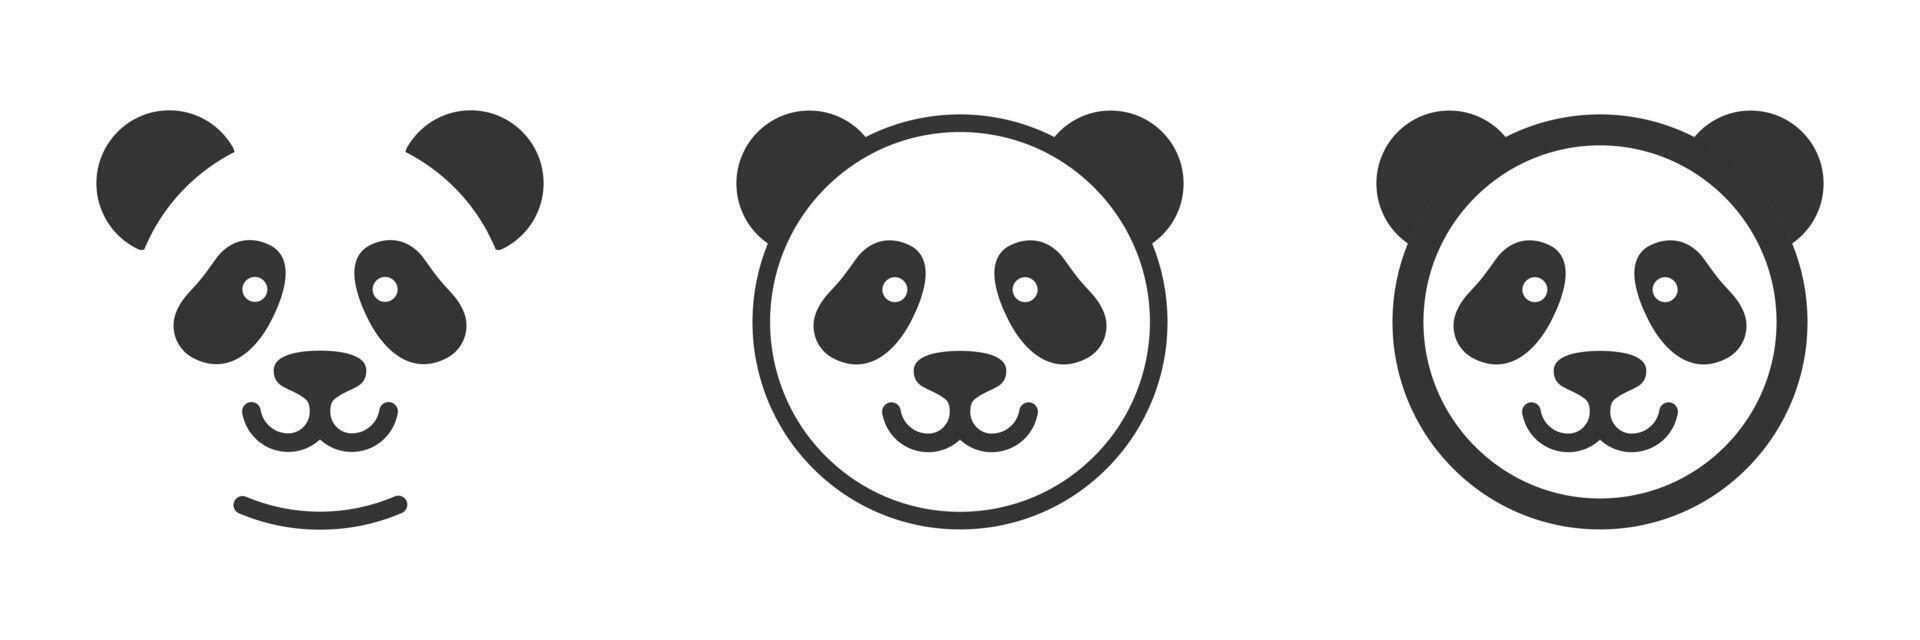 Panda face icon. Vector illustration.